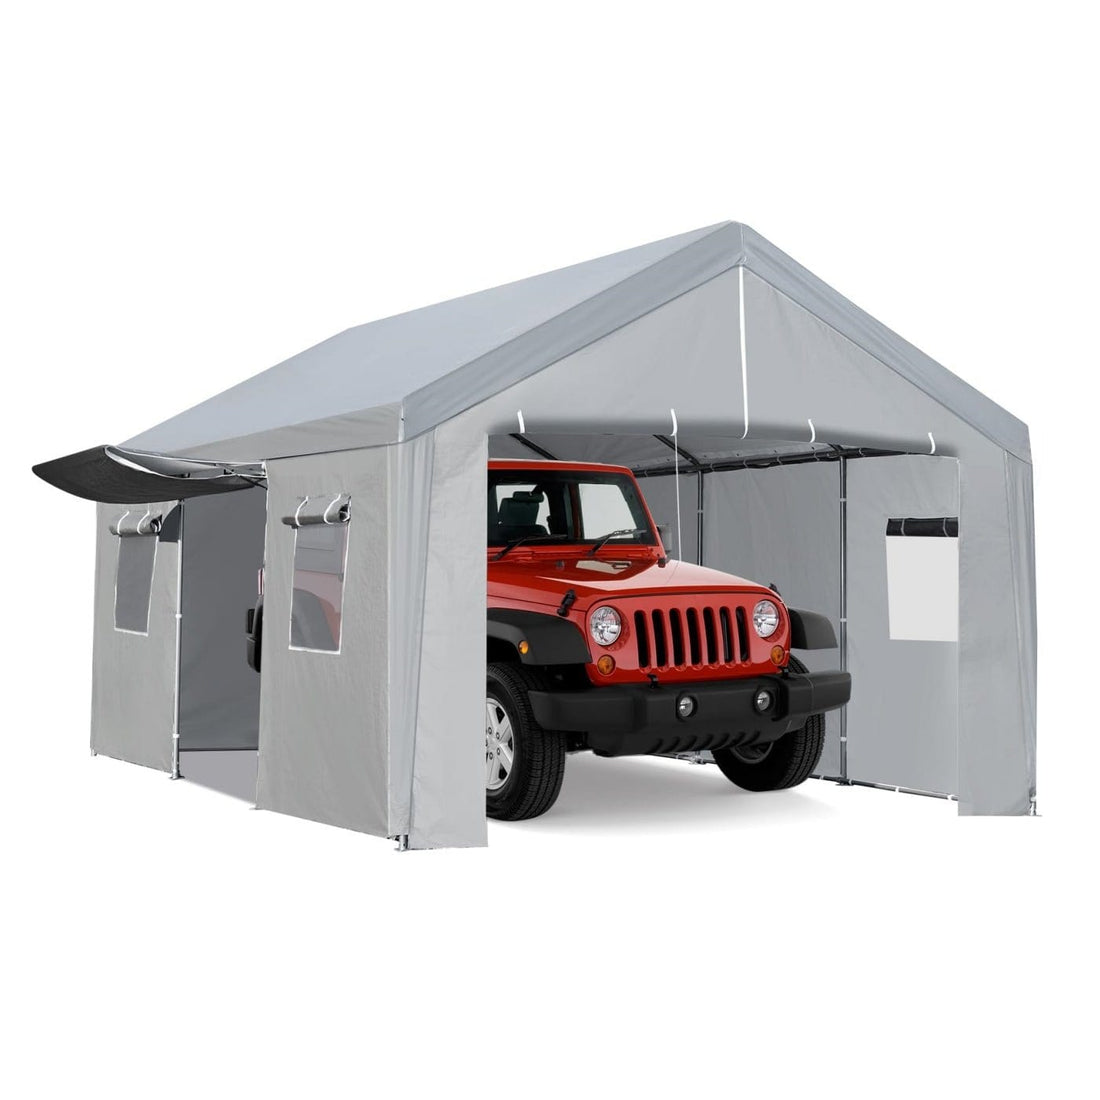 10x20 FT Heavy Duty Car Canopy with Ventilated Windows - GARVEE